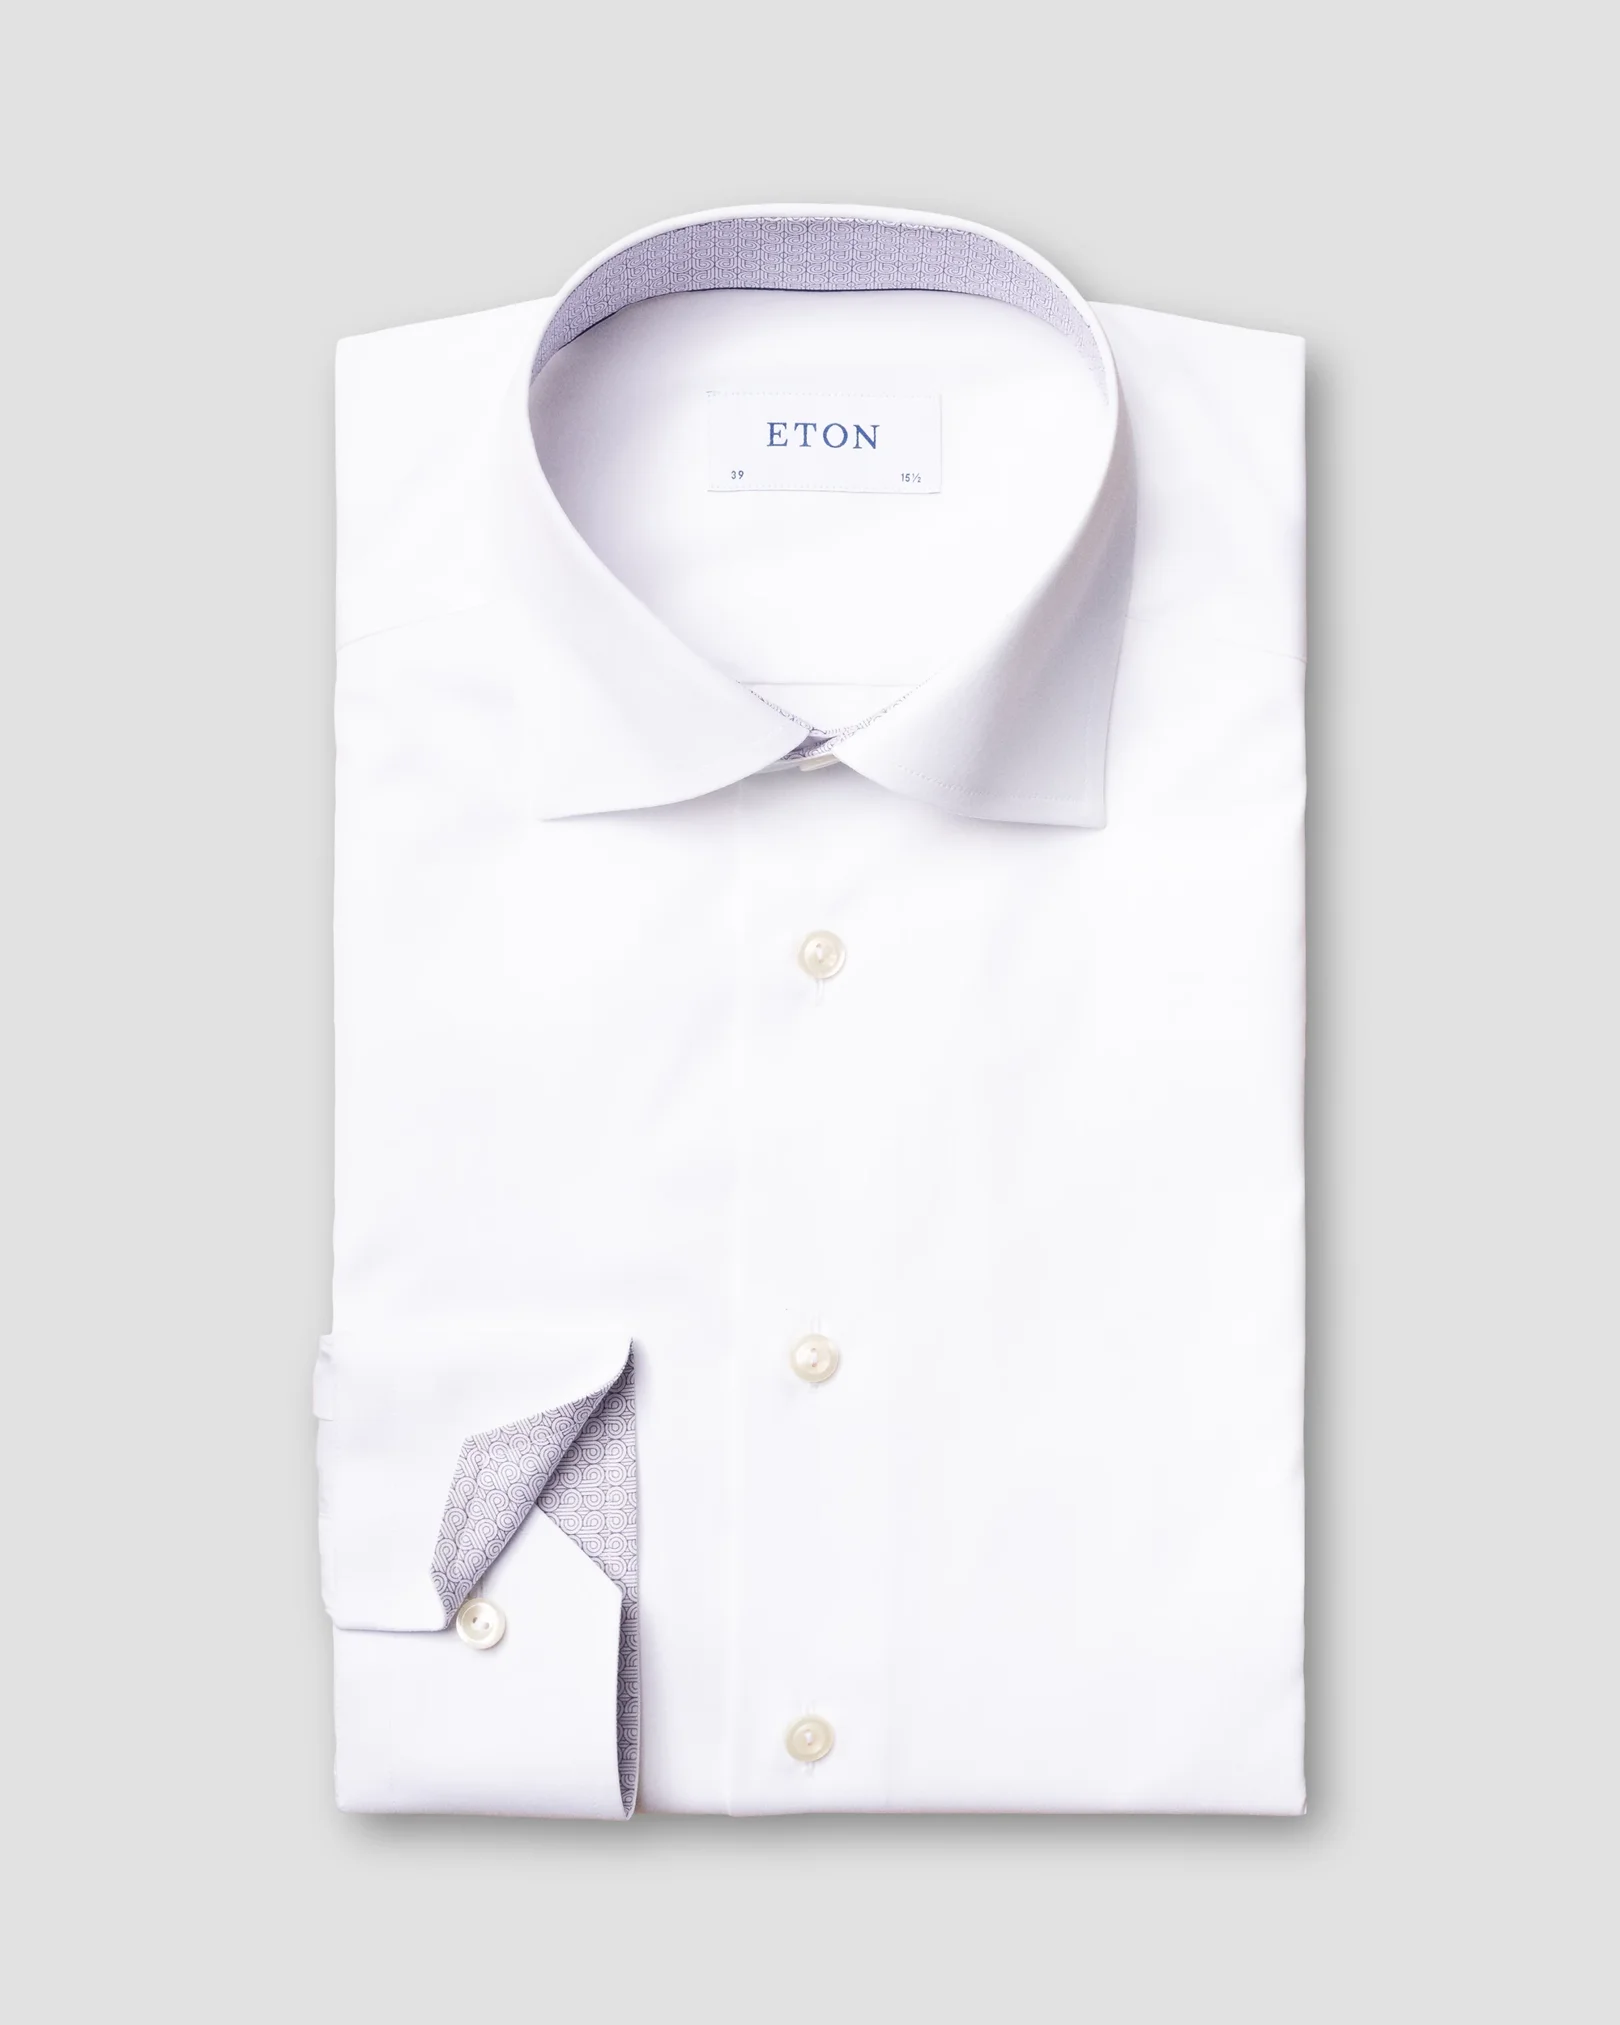 Eton - white poplin shirt art deco details